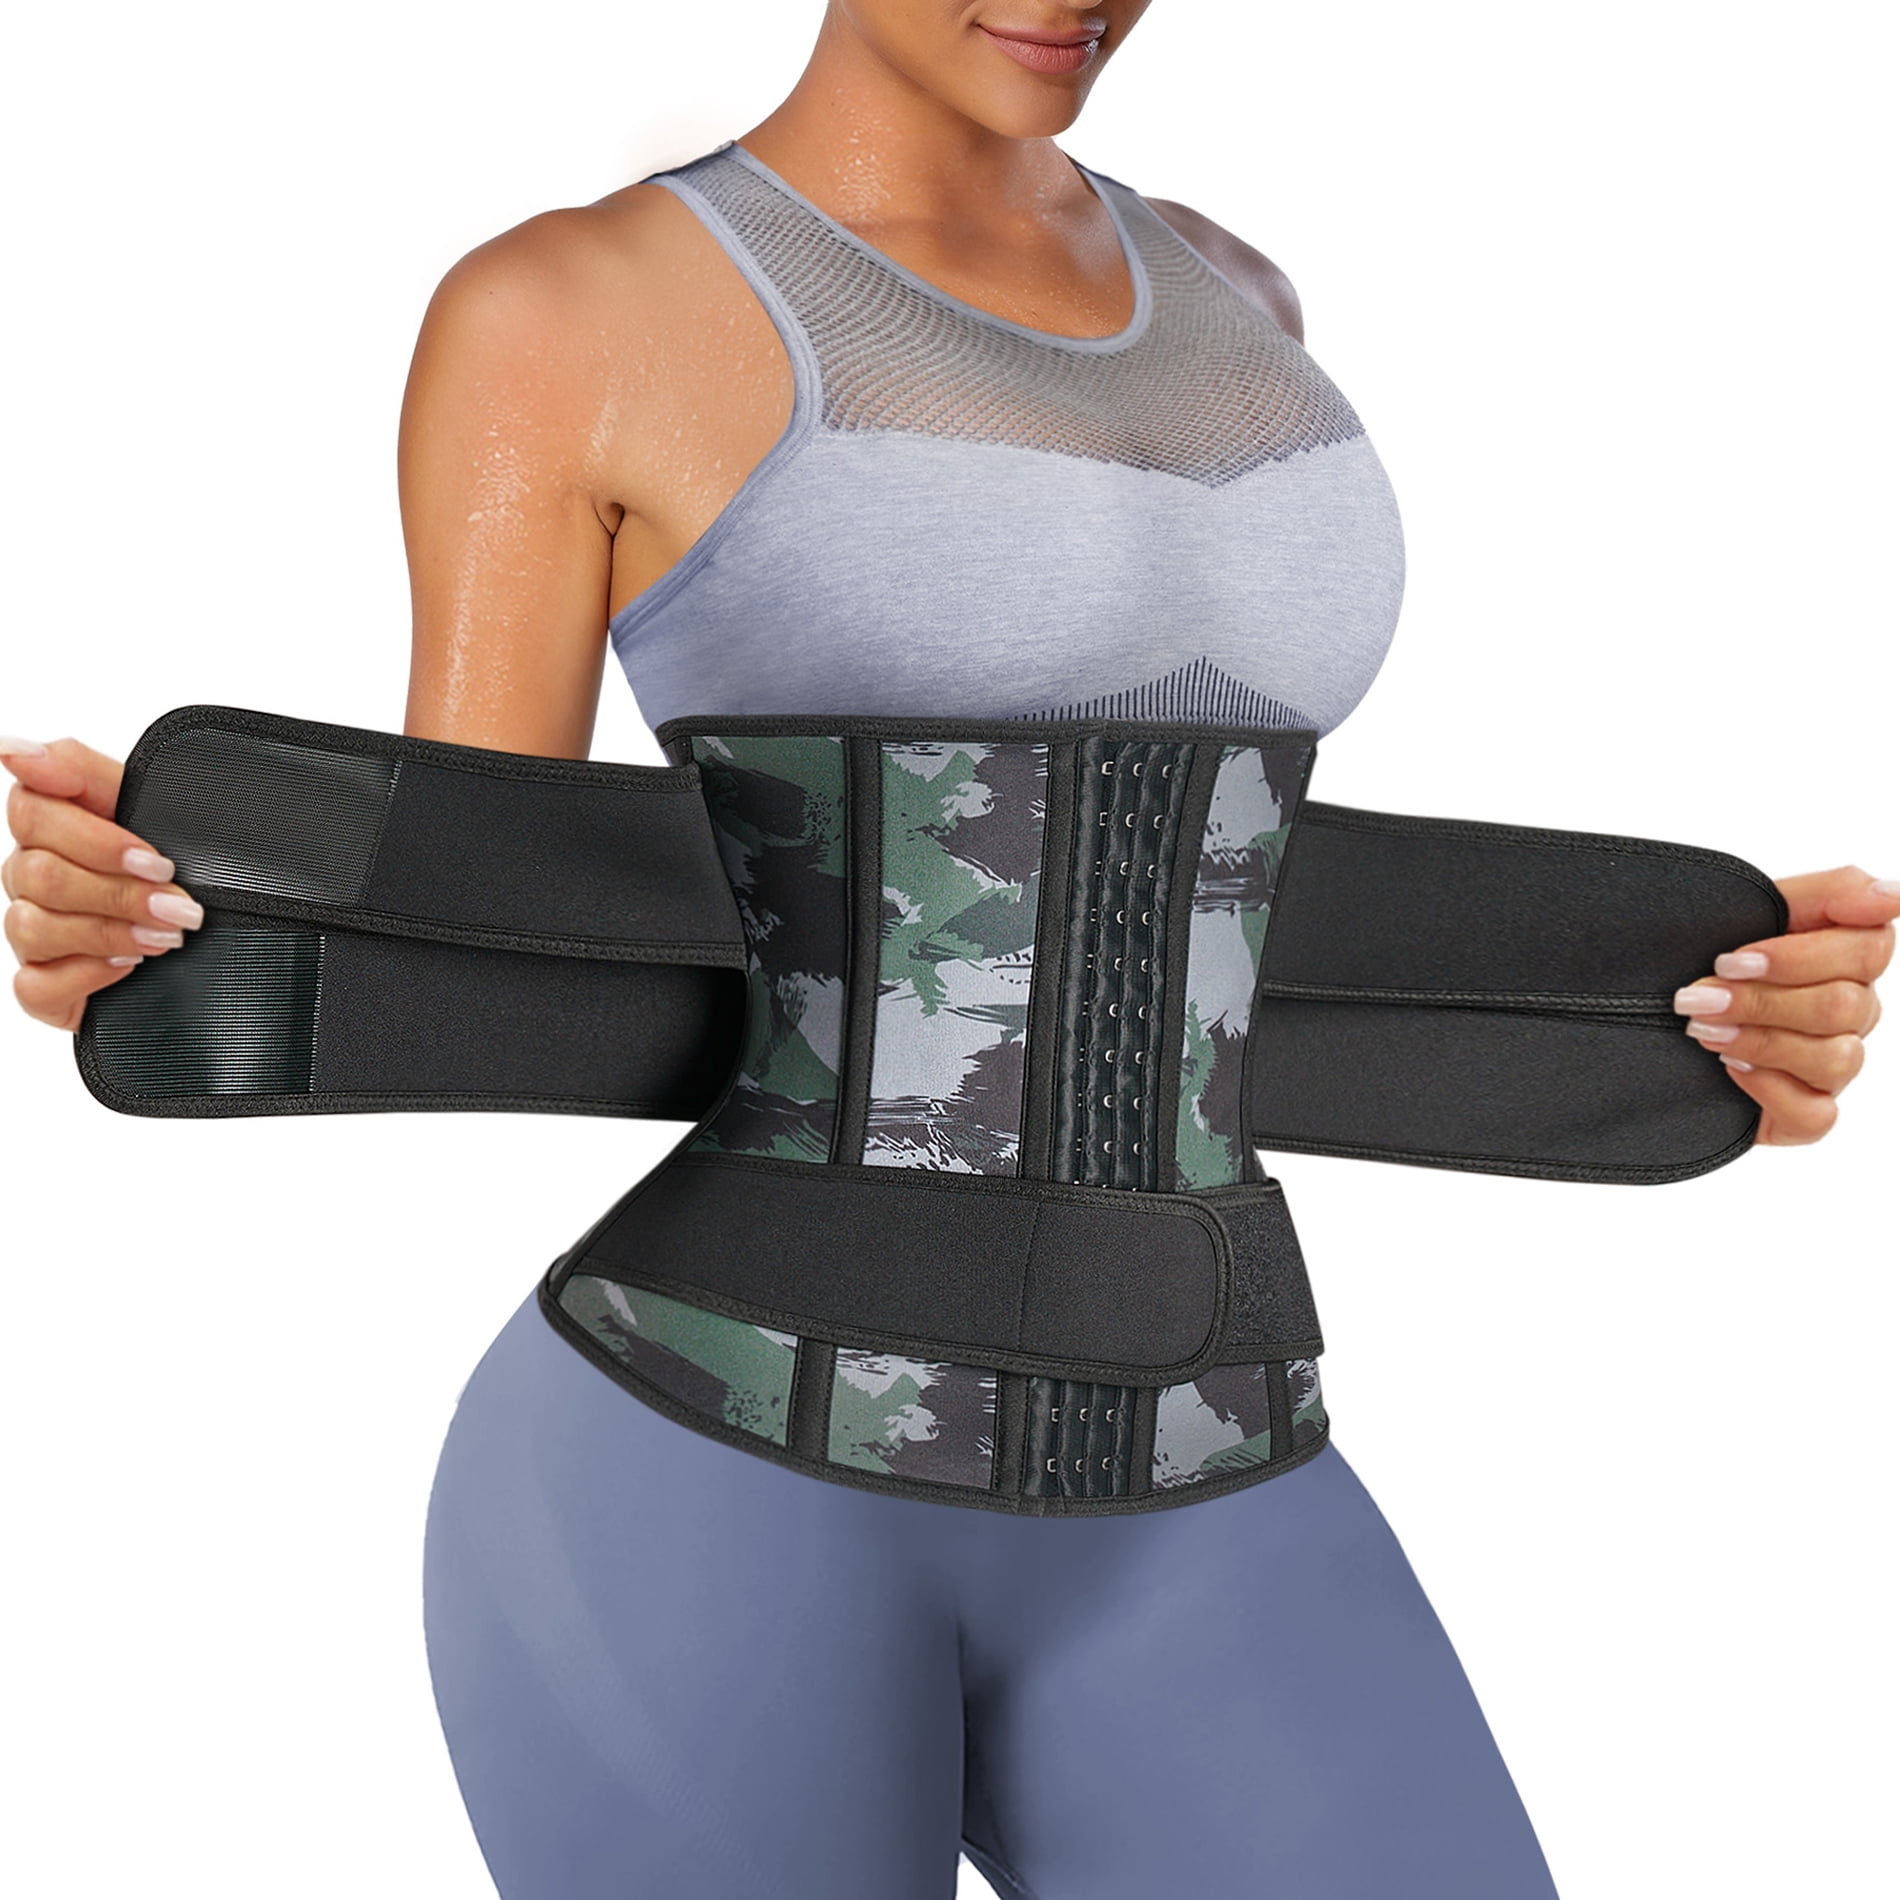 Slimming Body Shaper Belt Waist Trainer Belt for Women Waist Cincher Trimmer Fat Burner Slimming Weight Loss Belt 